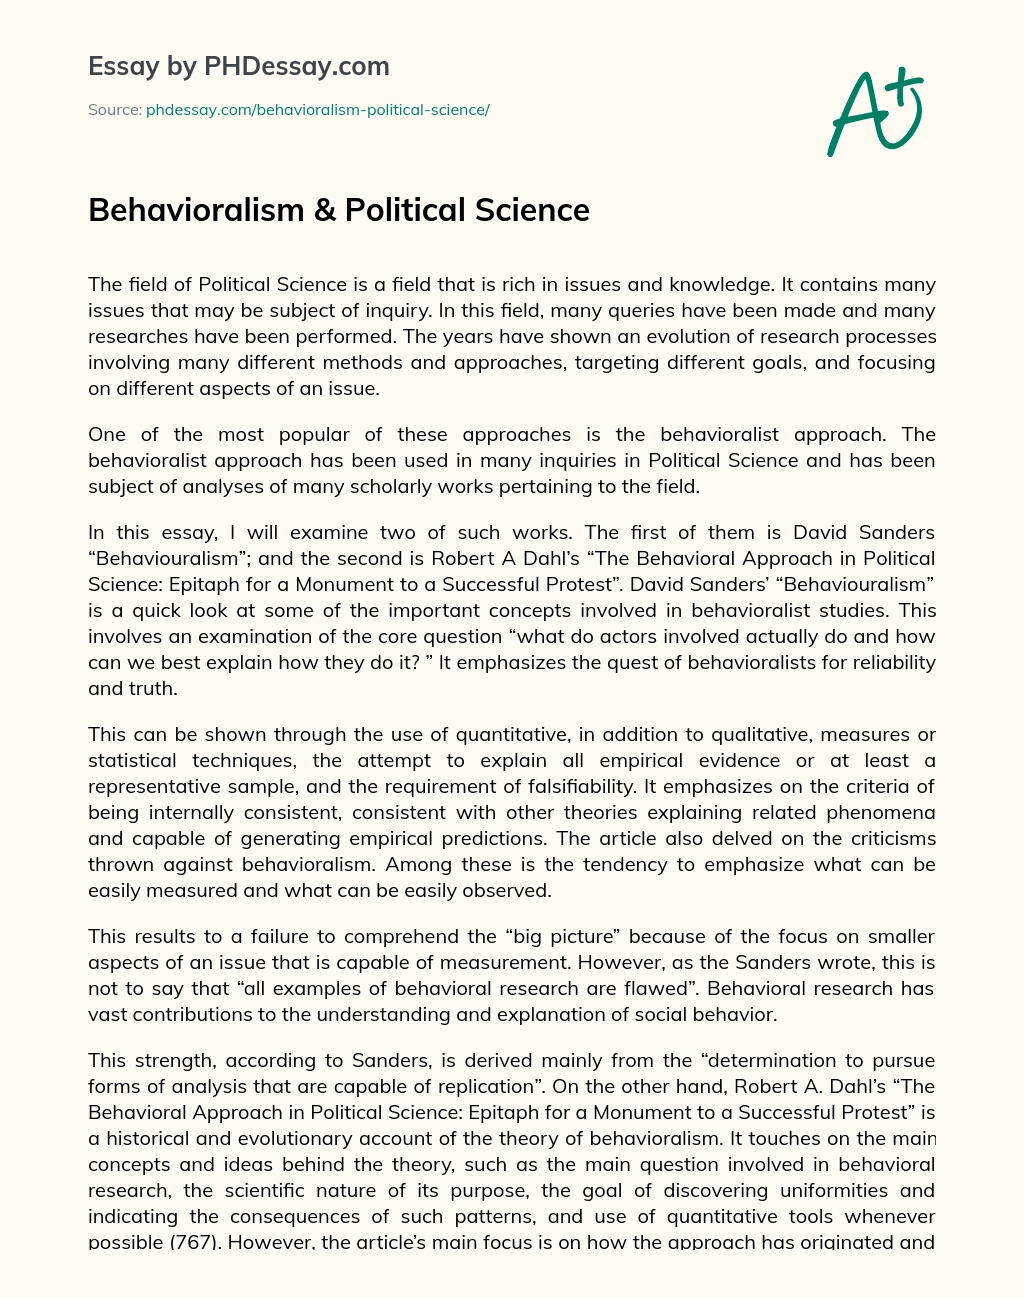 Behavioralism & Political Science essay